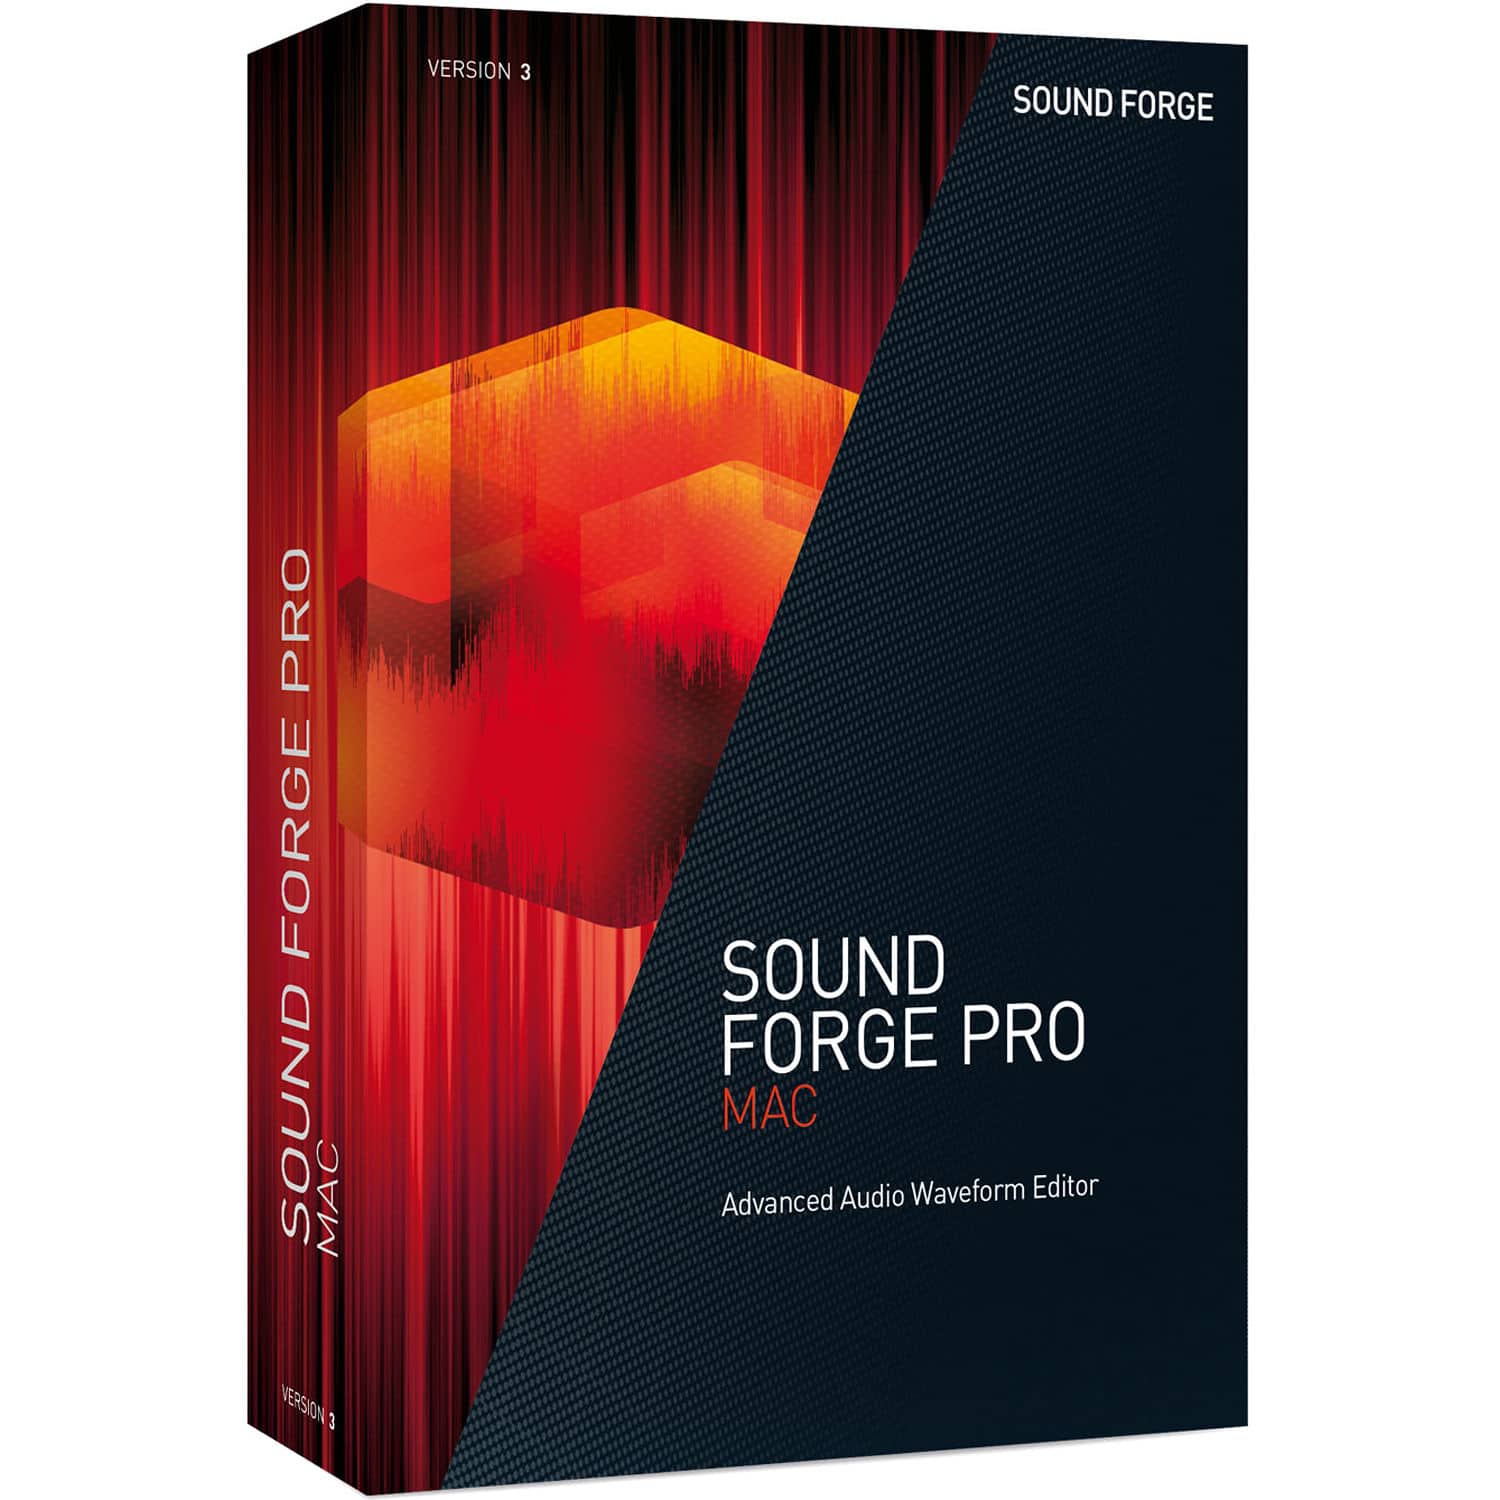 Reveal Sound Spire v1.1.12 Free Download Crack Windows Mac MacOSX